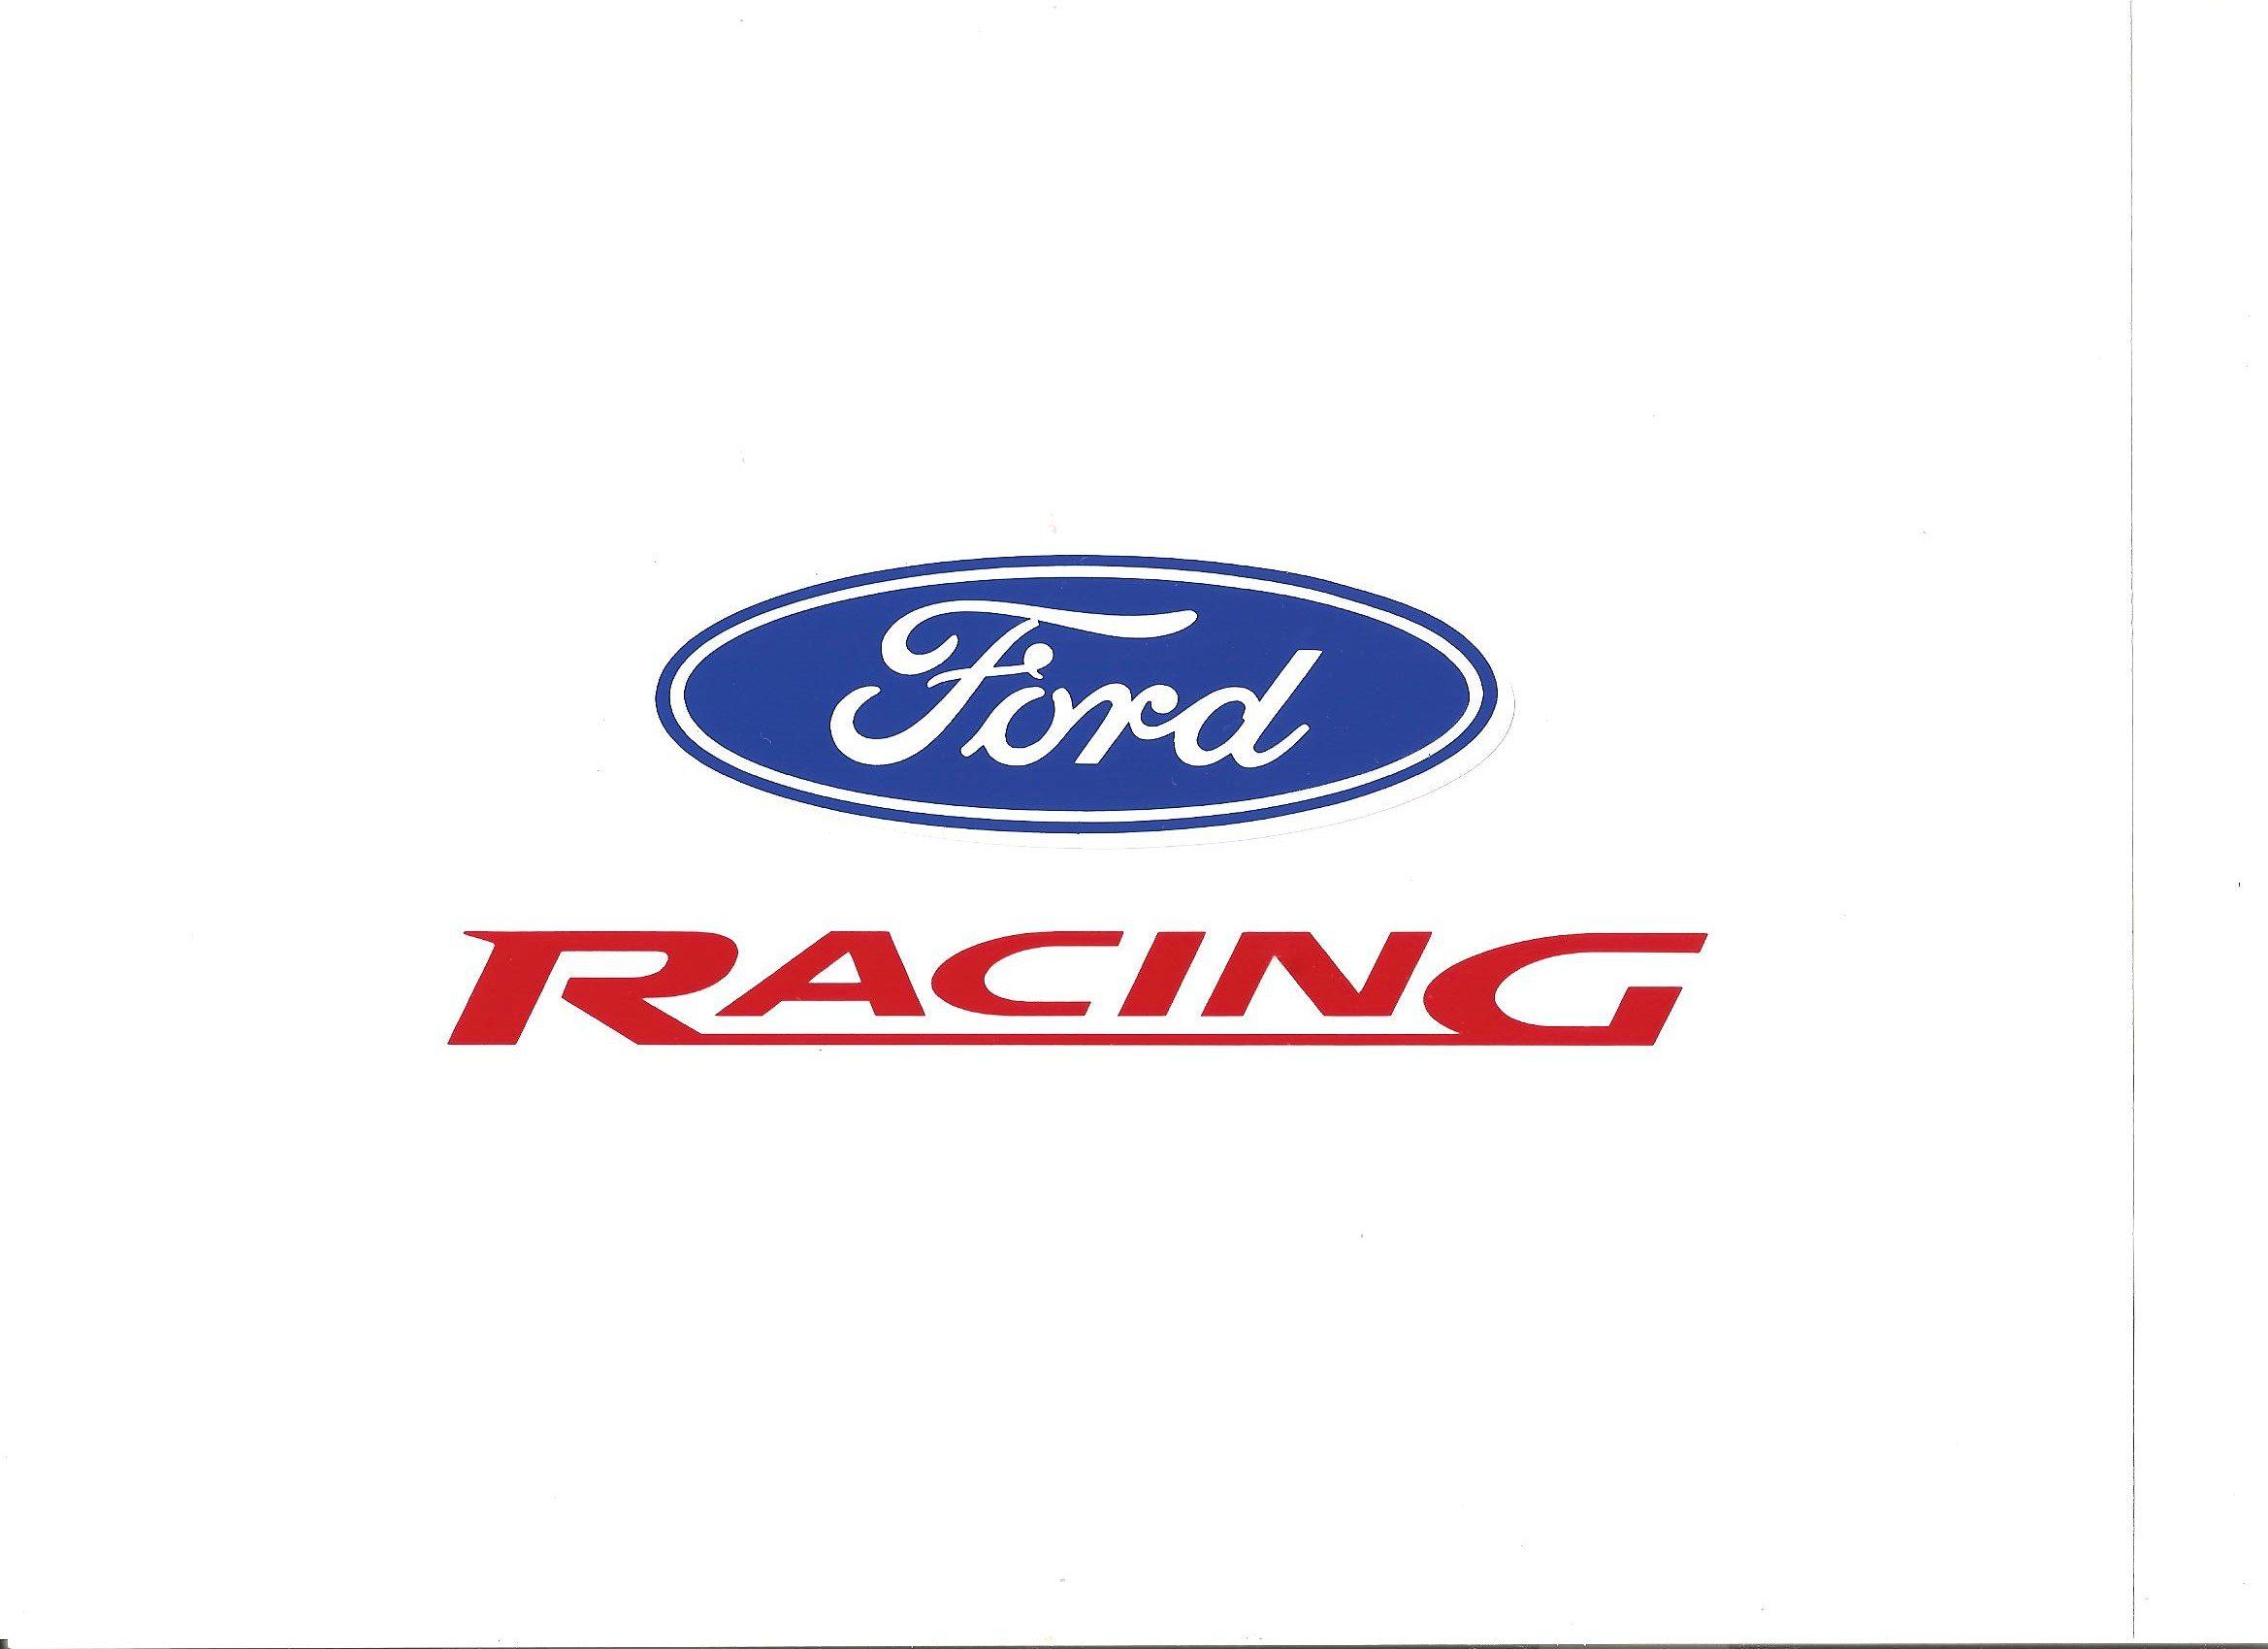 Ford Racing Logo Wallpaper - image #689